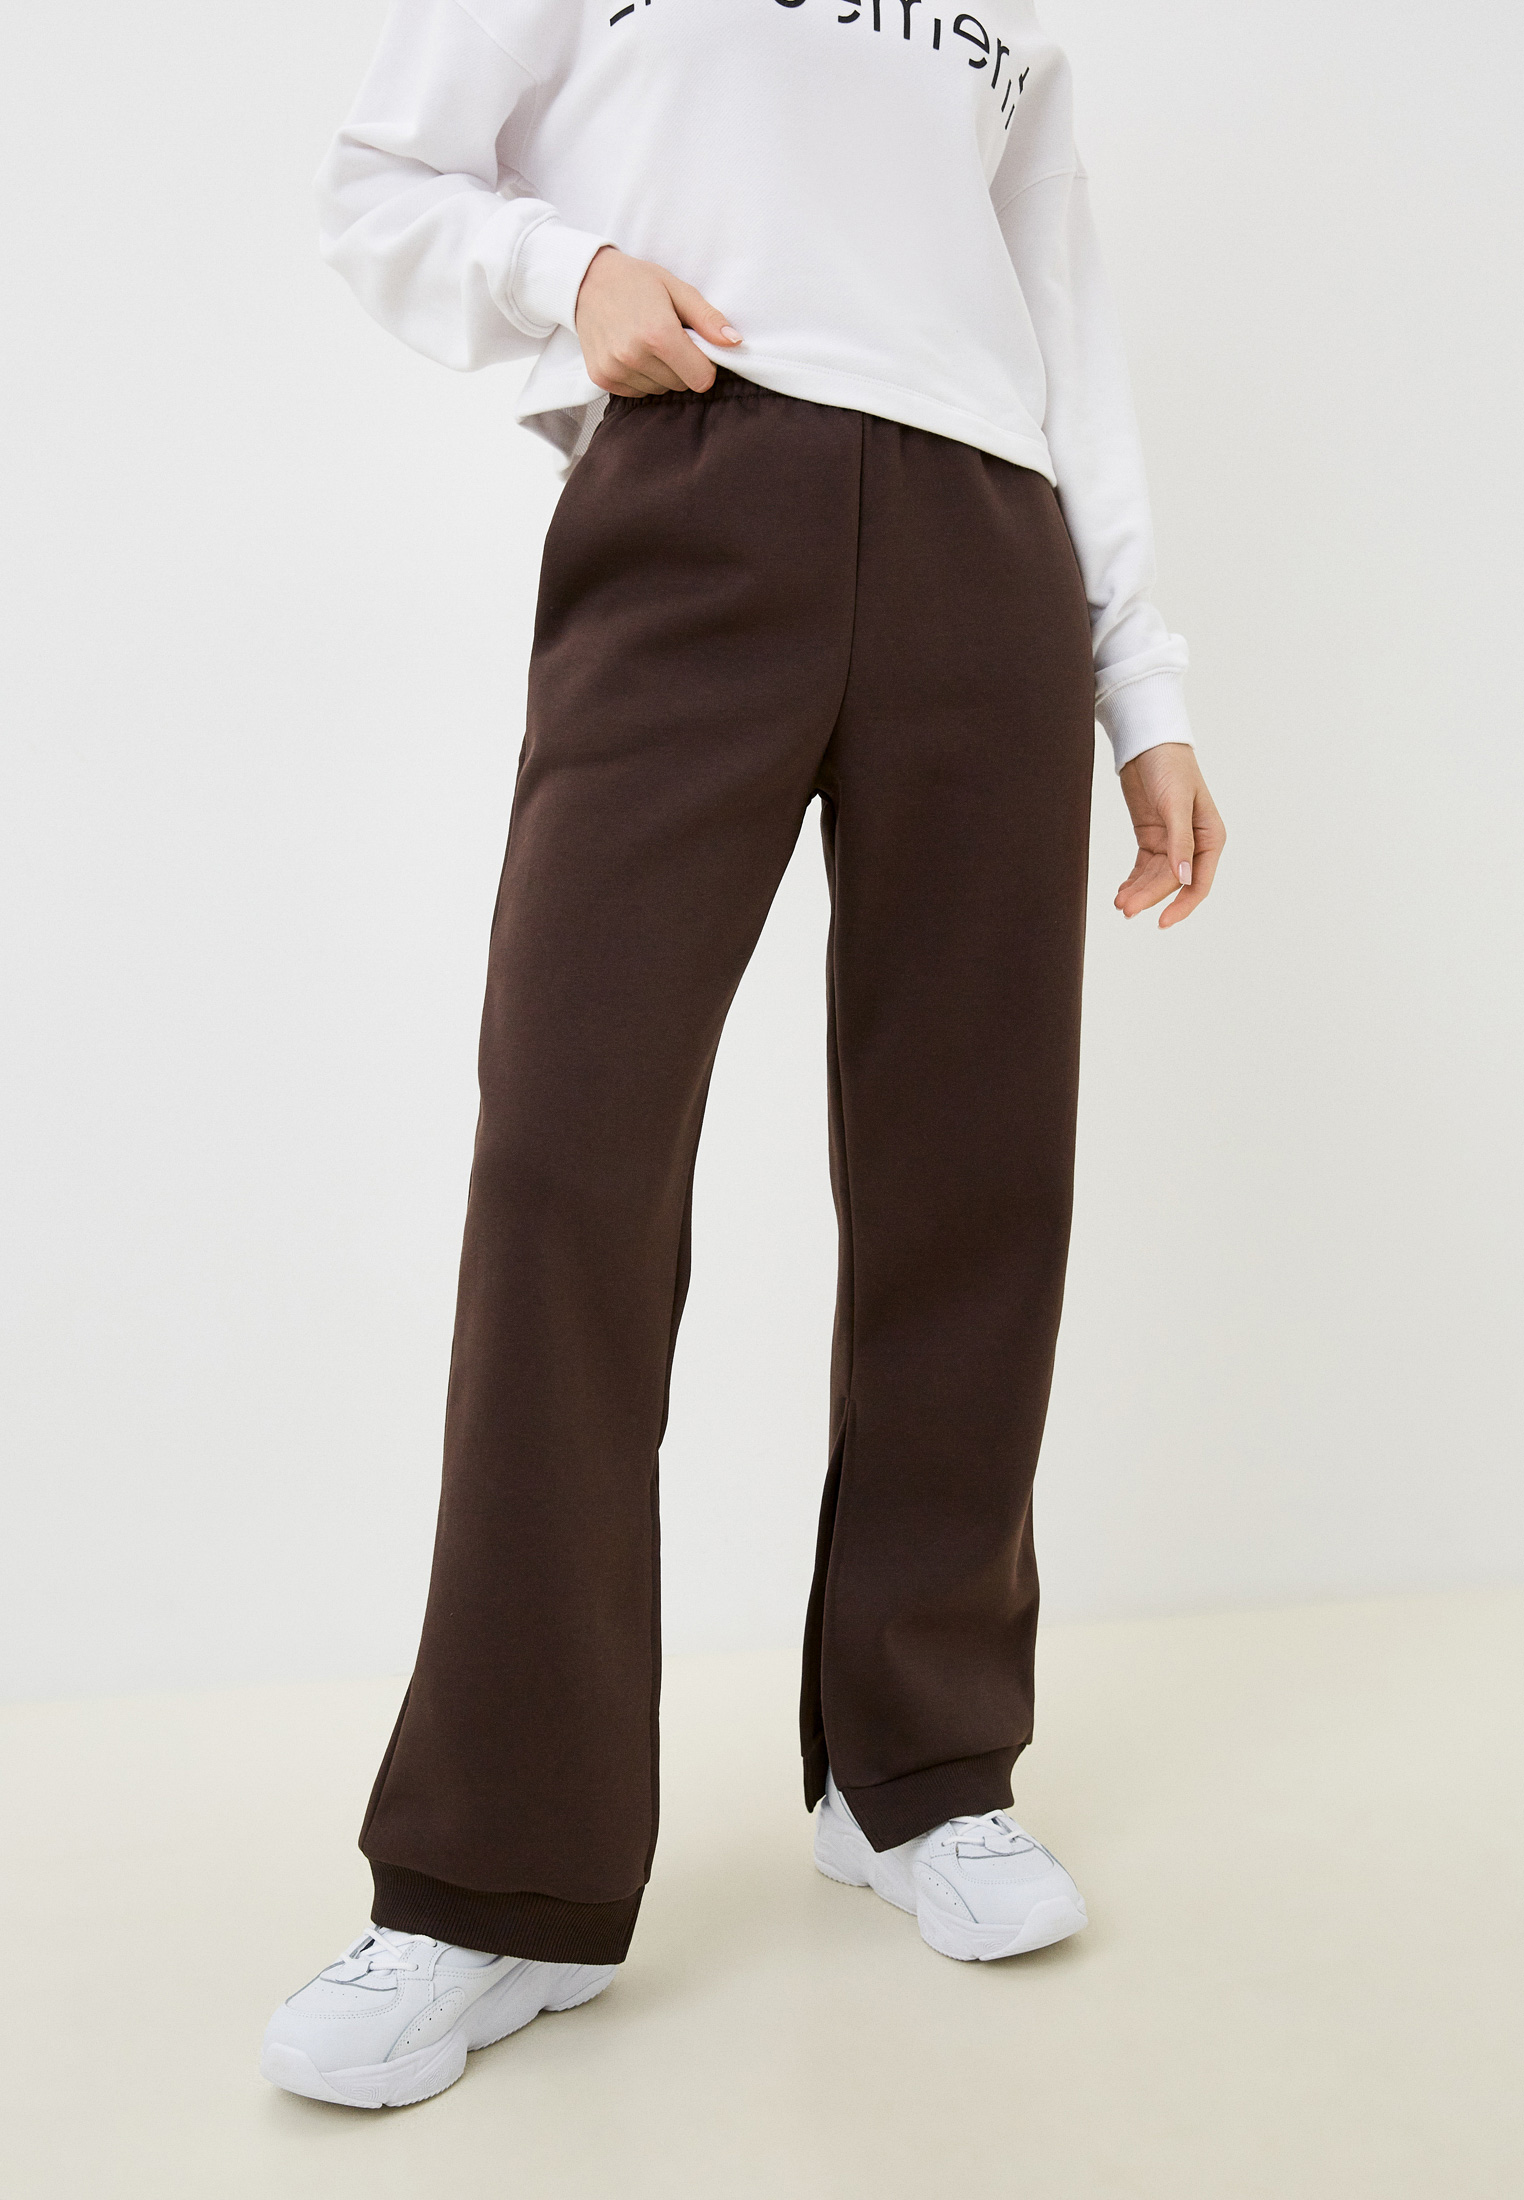 Женские брюки Irnby LG24-1802